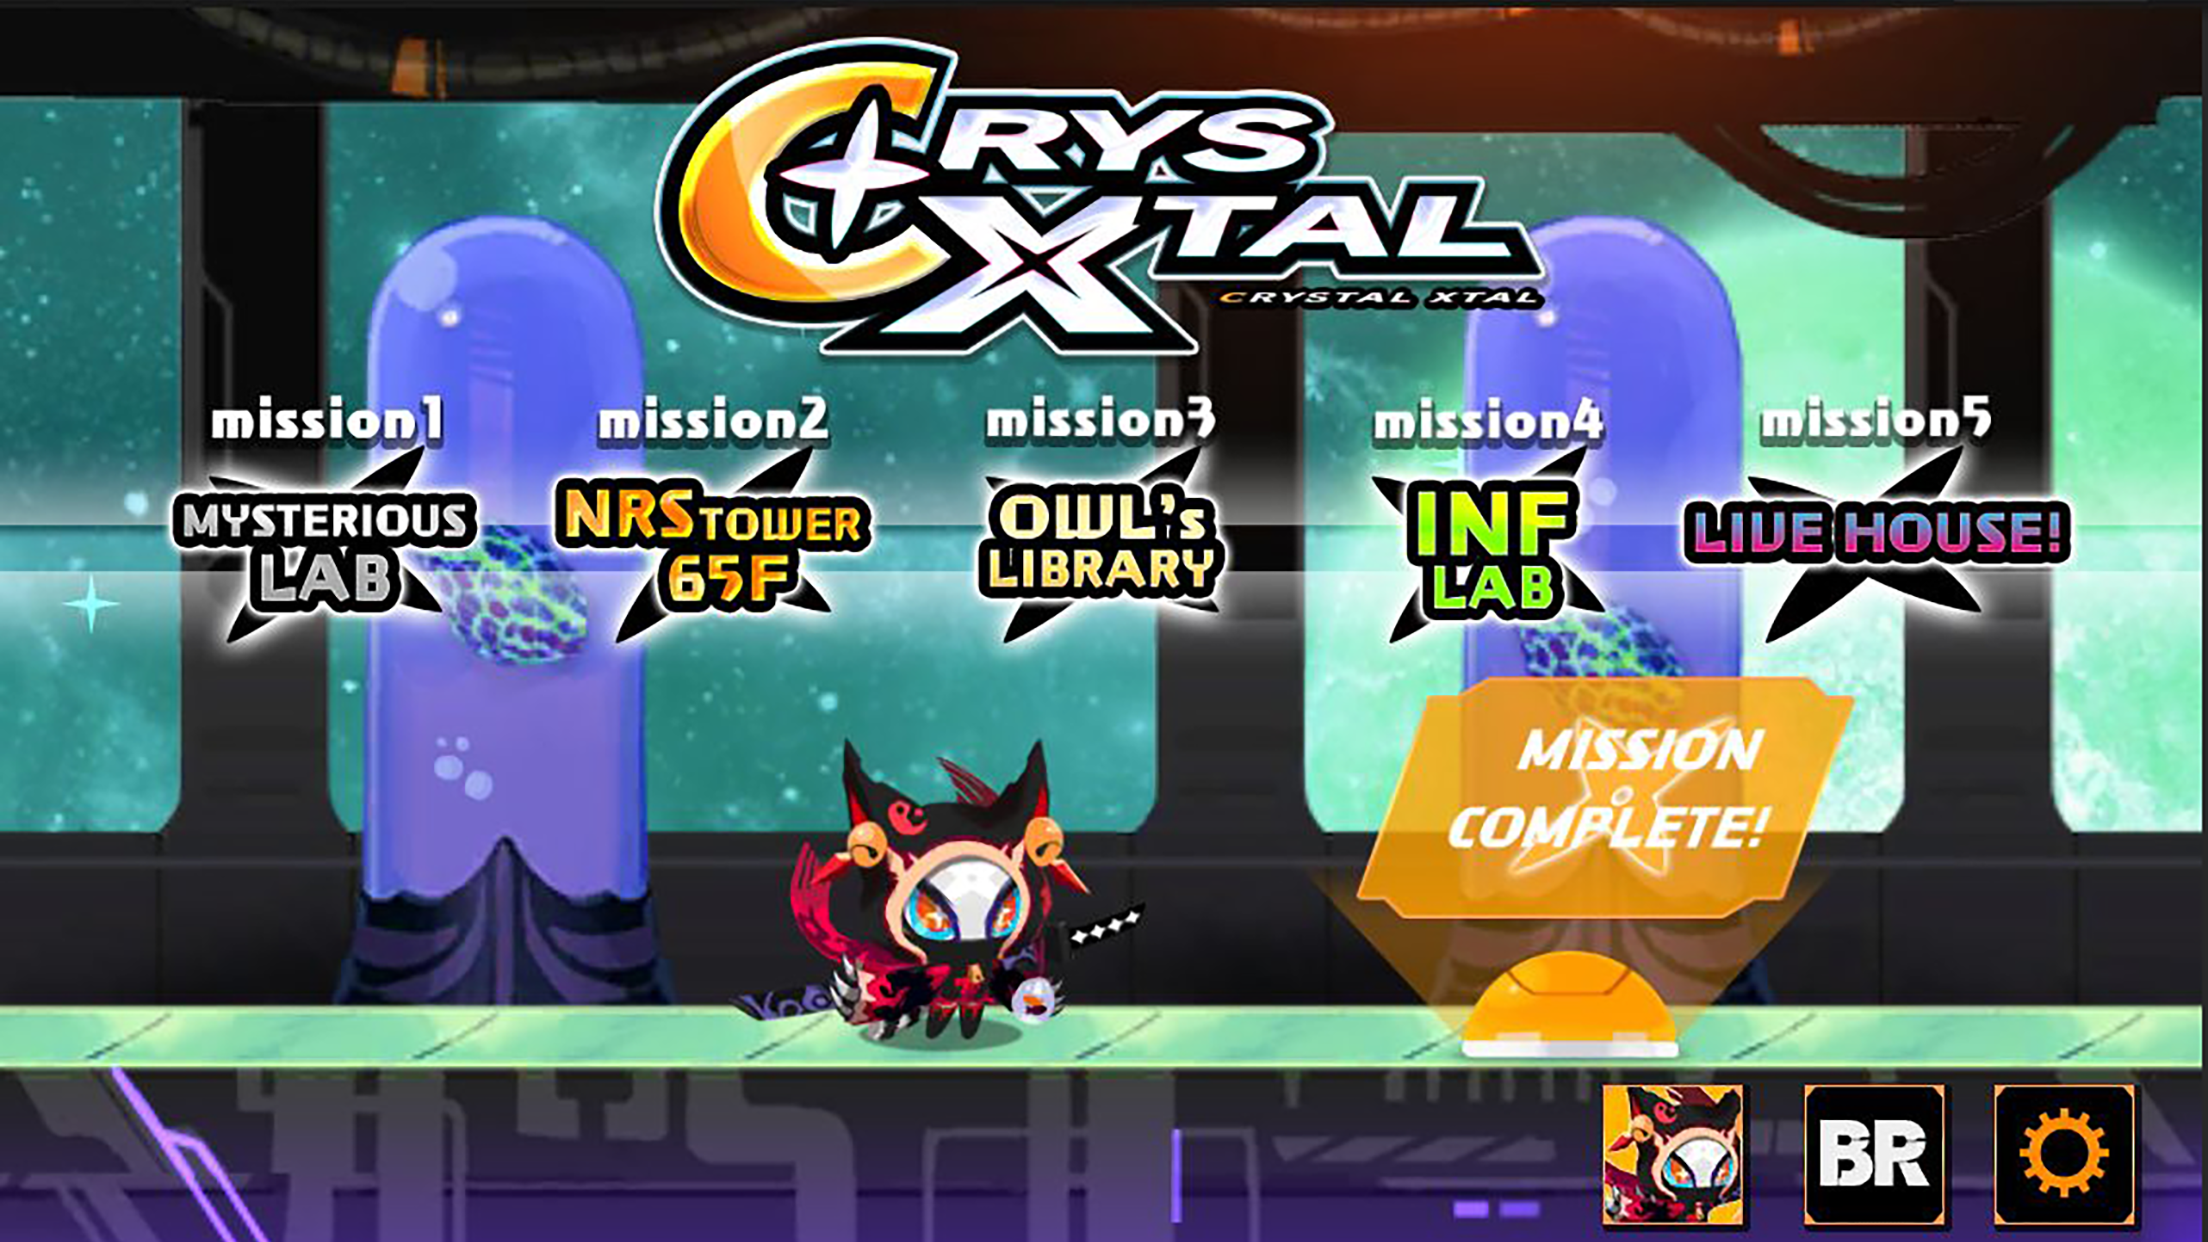 Screenshot 1 of CRYSTAL XTAL - Ninja Mèo Bắn Súng 1.3